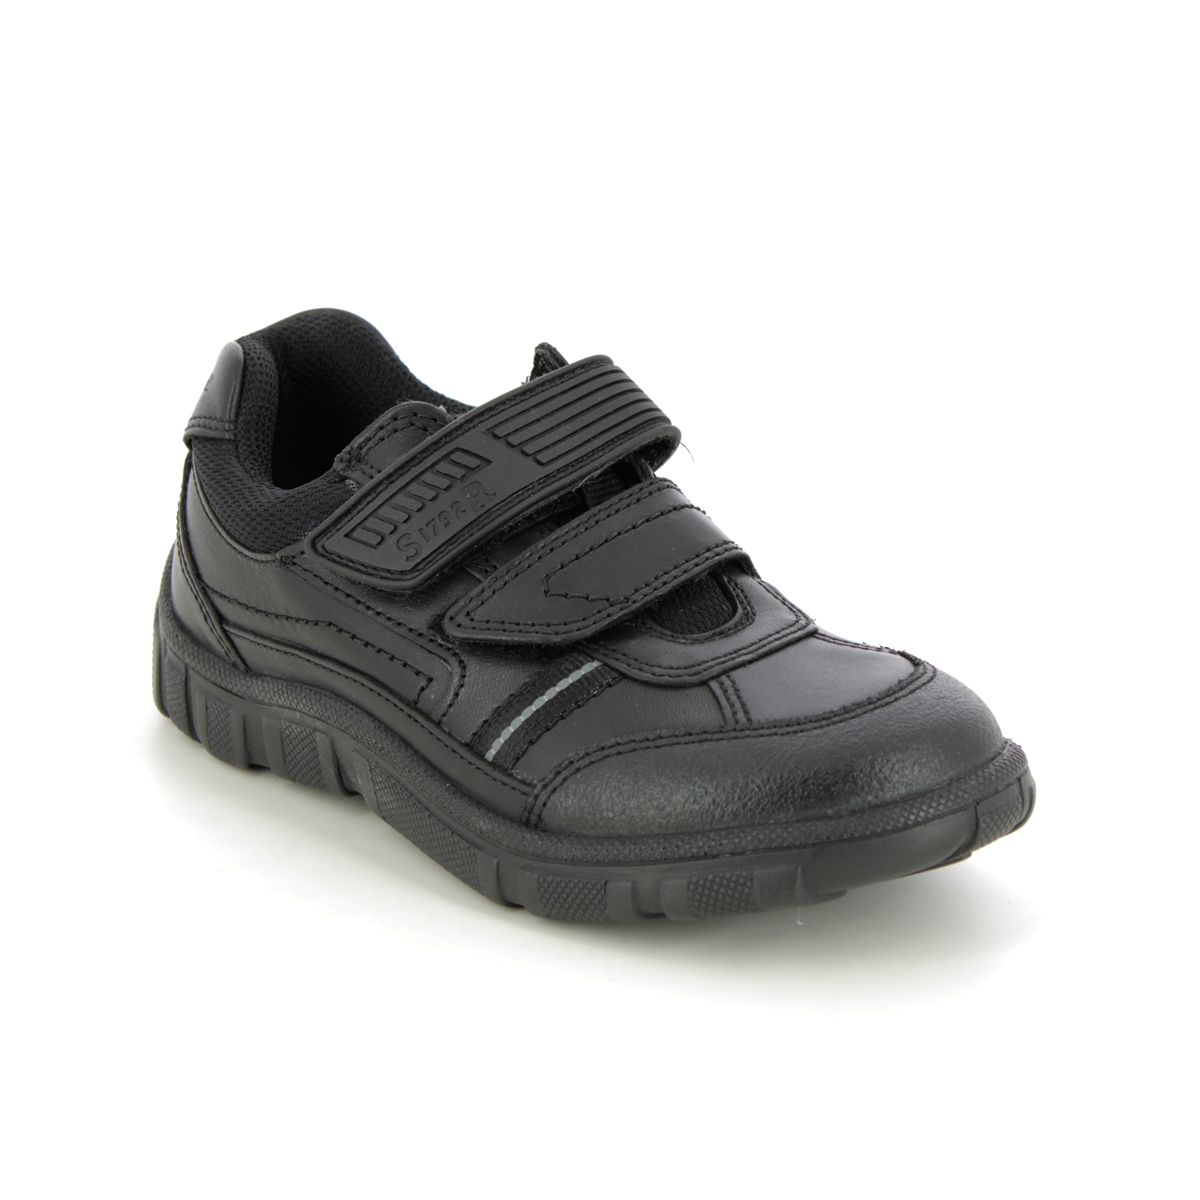 Start Rite - Luke 2V In Black Leather 2273-76F In Size 2.5 In Plain Black Leather For School Boys Shoes  In Black Leather For kids